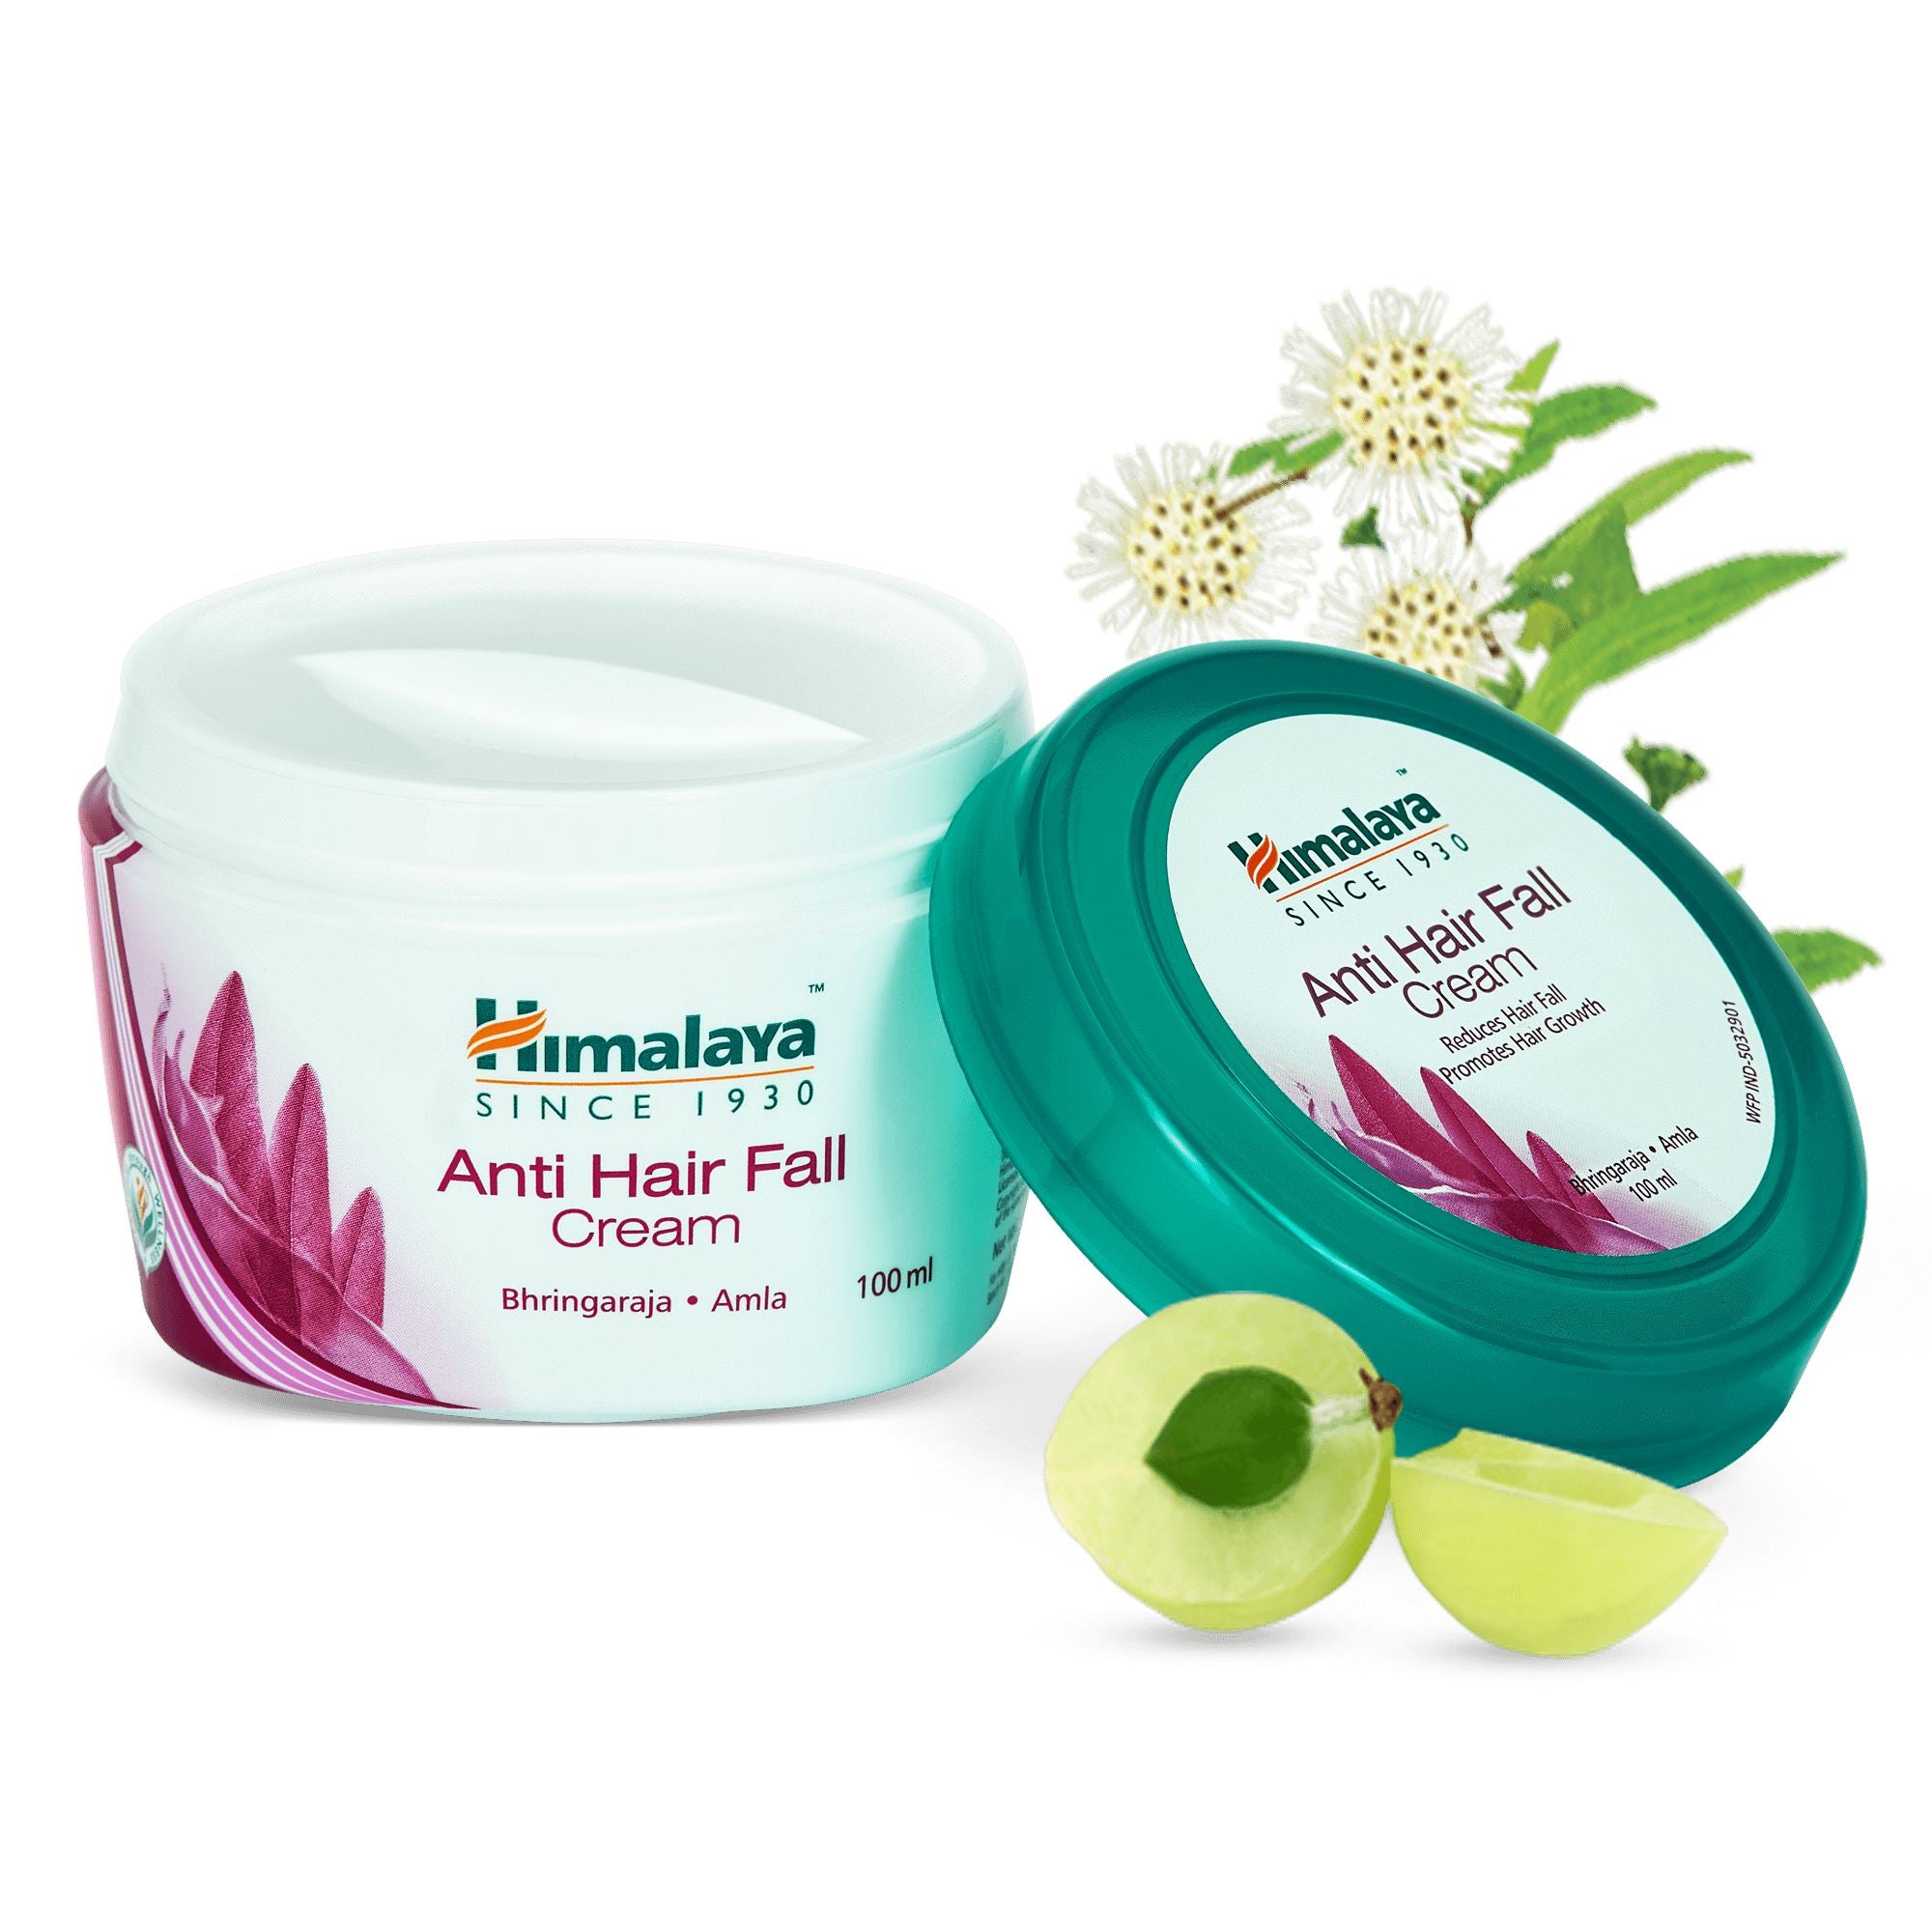 Himalaya Anti-Hair Fall Cream - Reduces hair fall and promotes hair growth